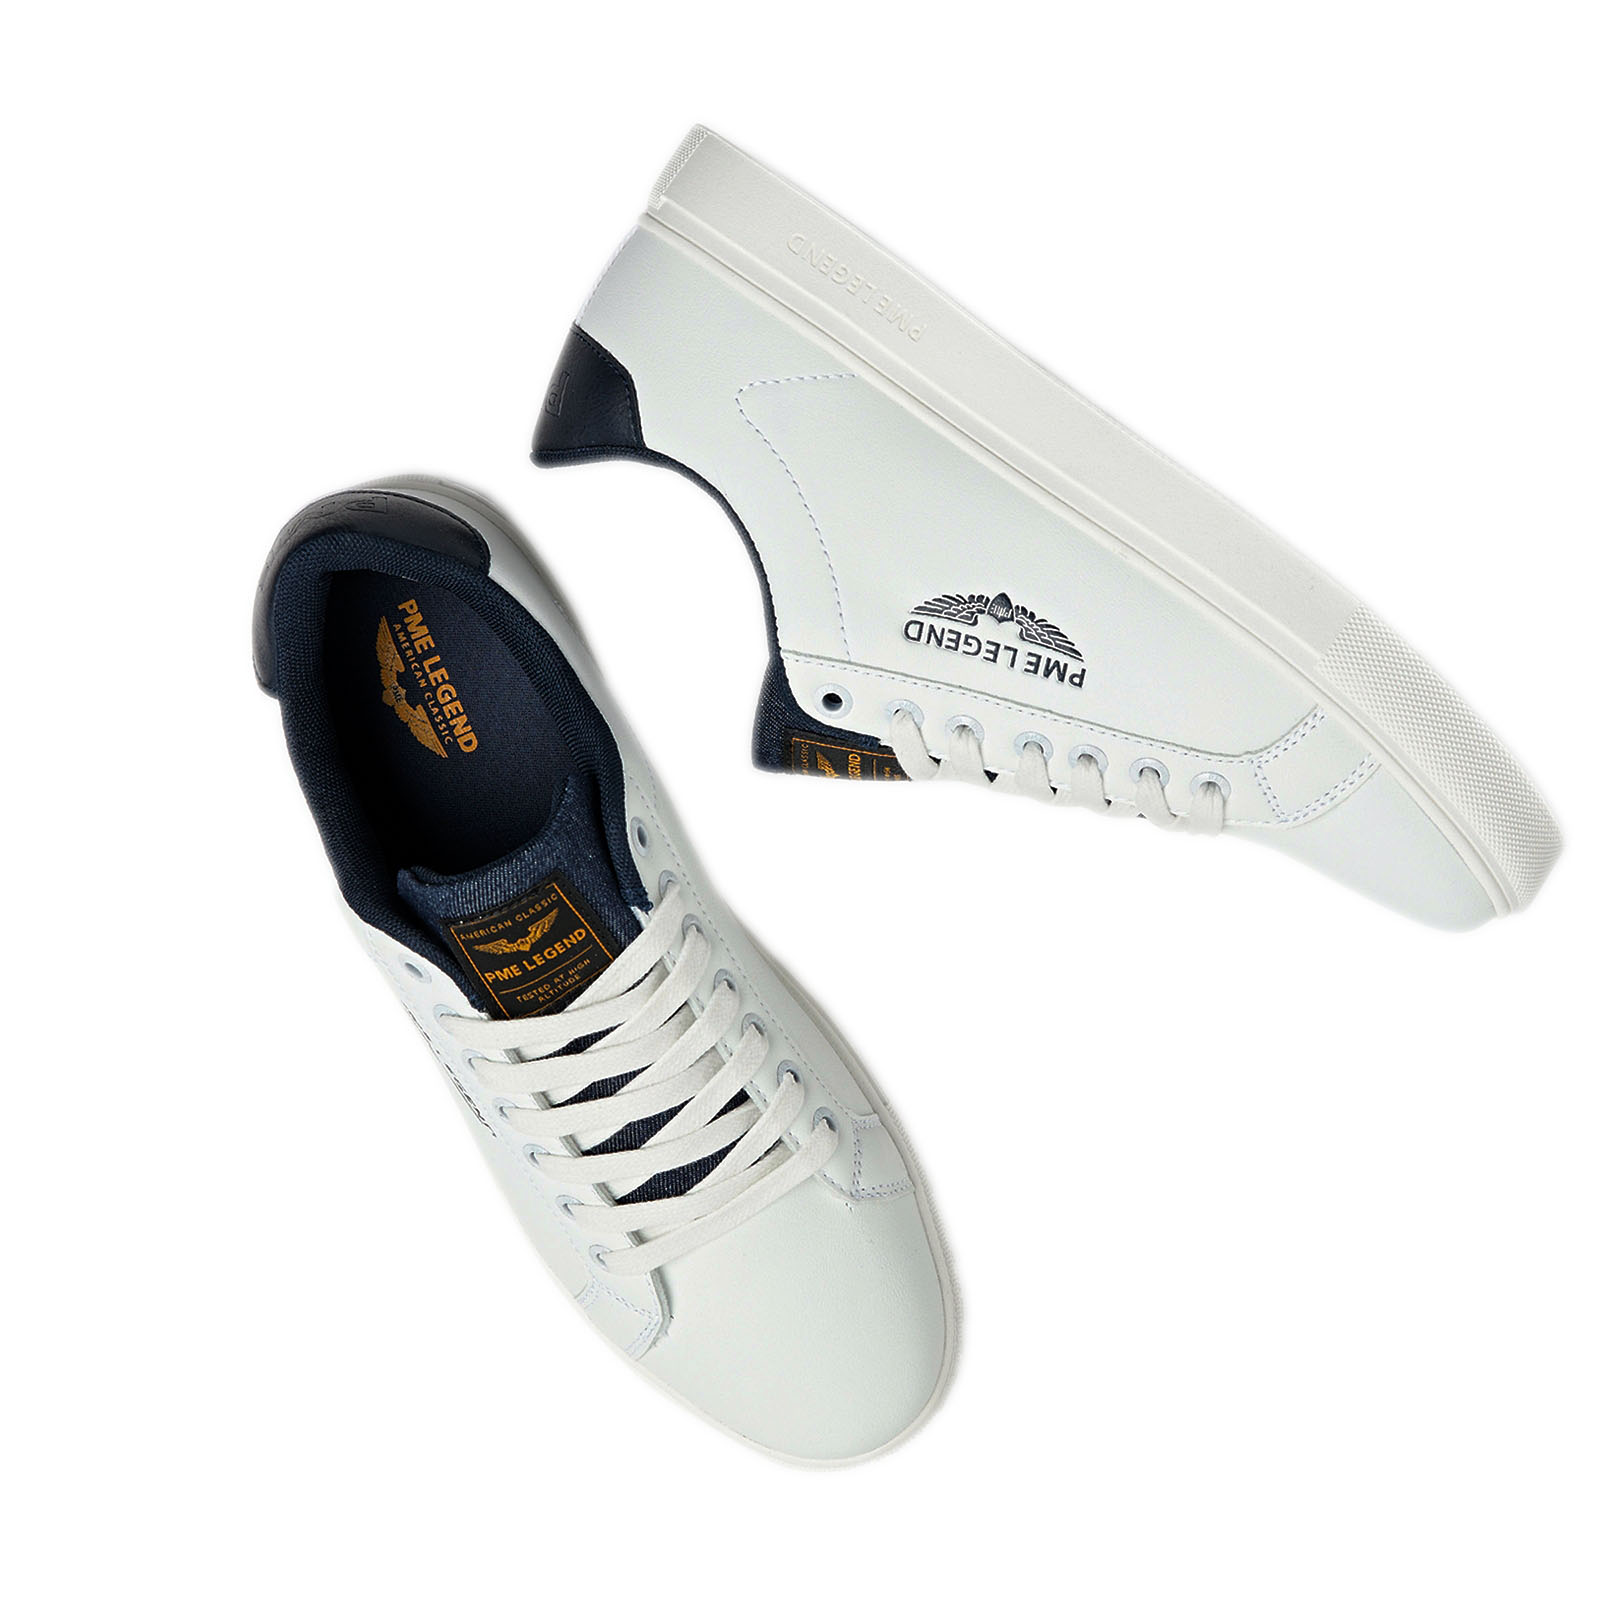 PME Legend Herren Sportschuhe Sneaker Runner Craftler blau weiß PBO2203150 906 high rise